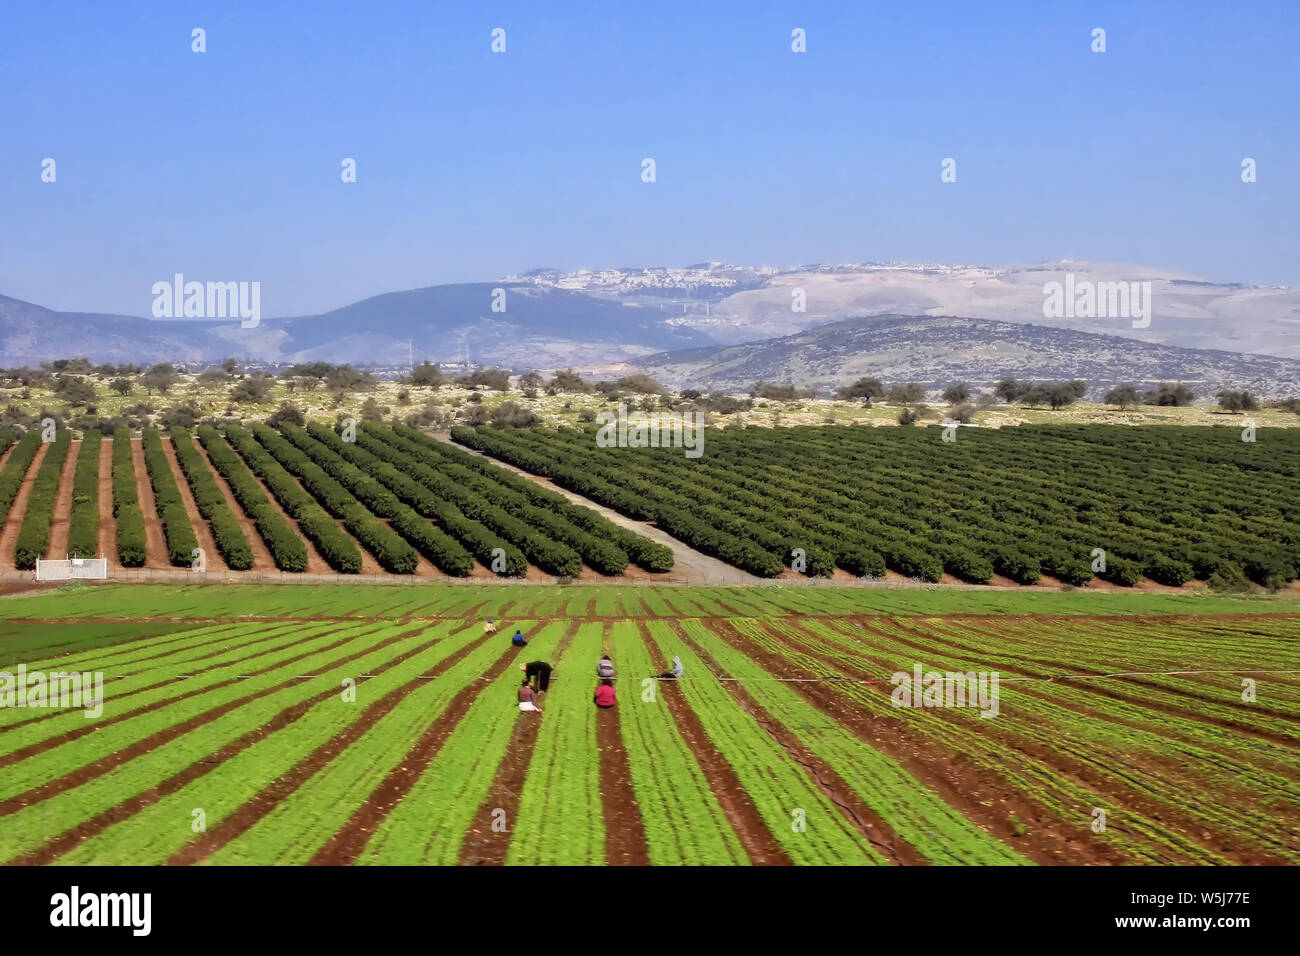 Workers in winter crop fields just east of Mount Carmel in the Galilee area of Israel. Stock Photo